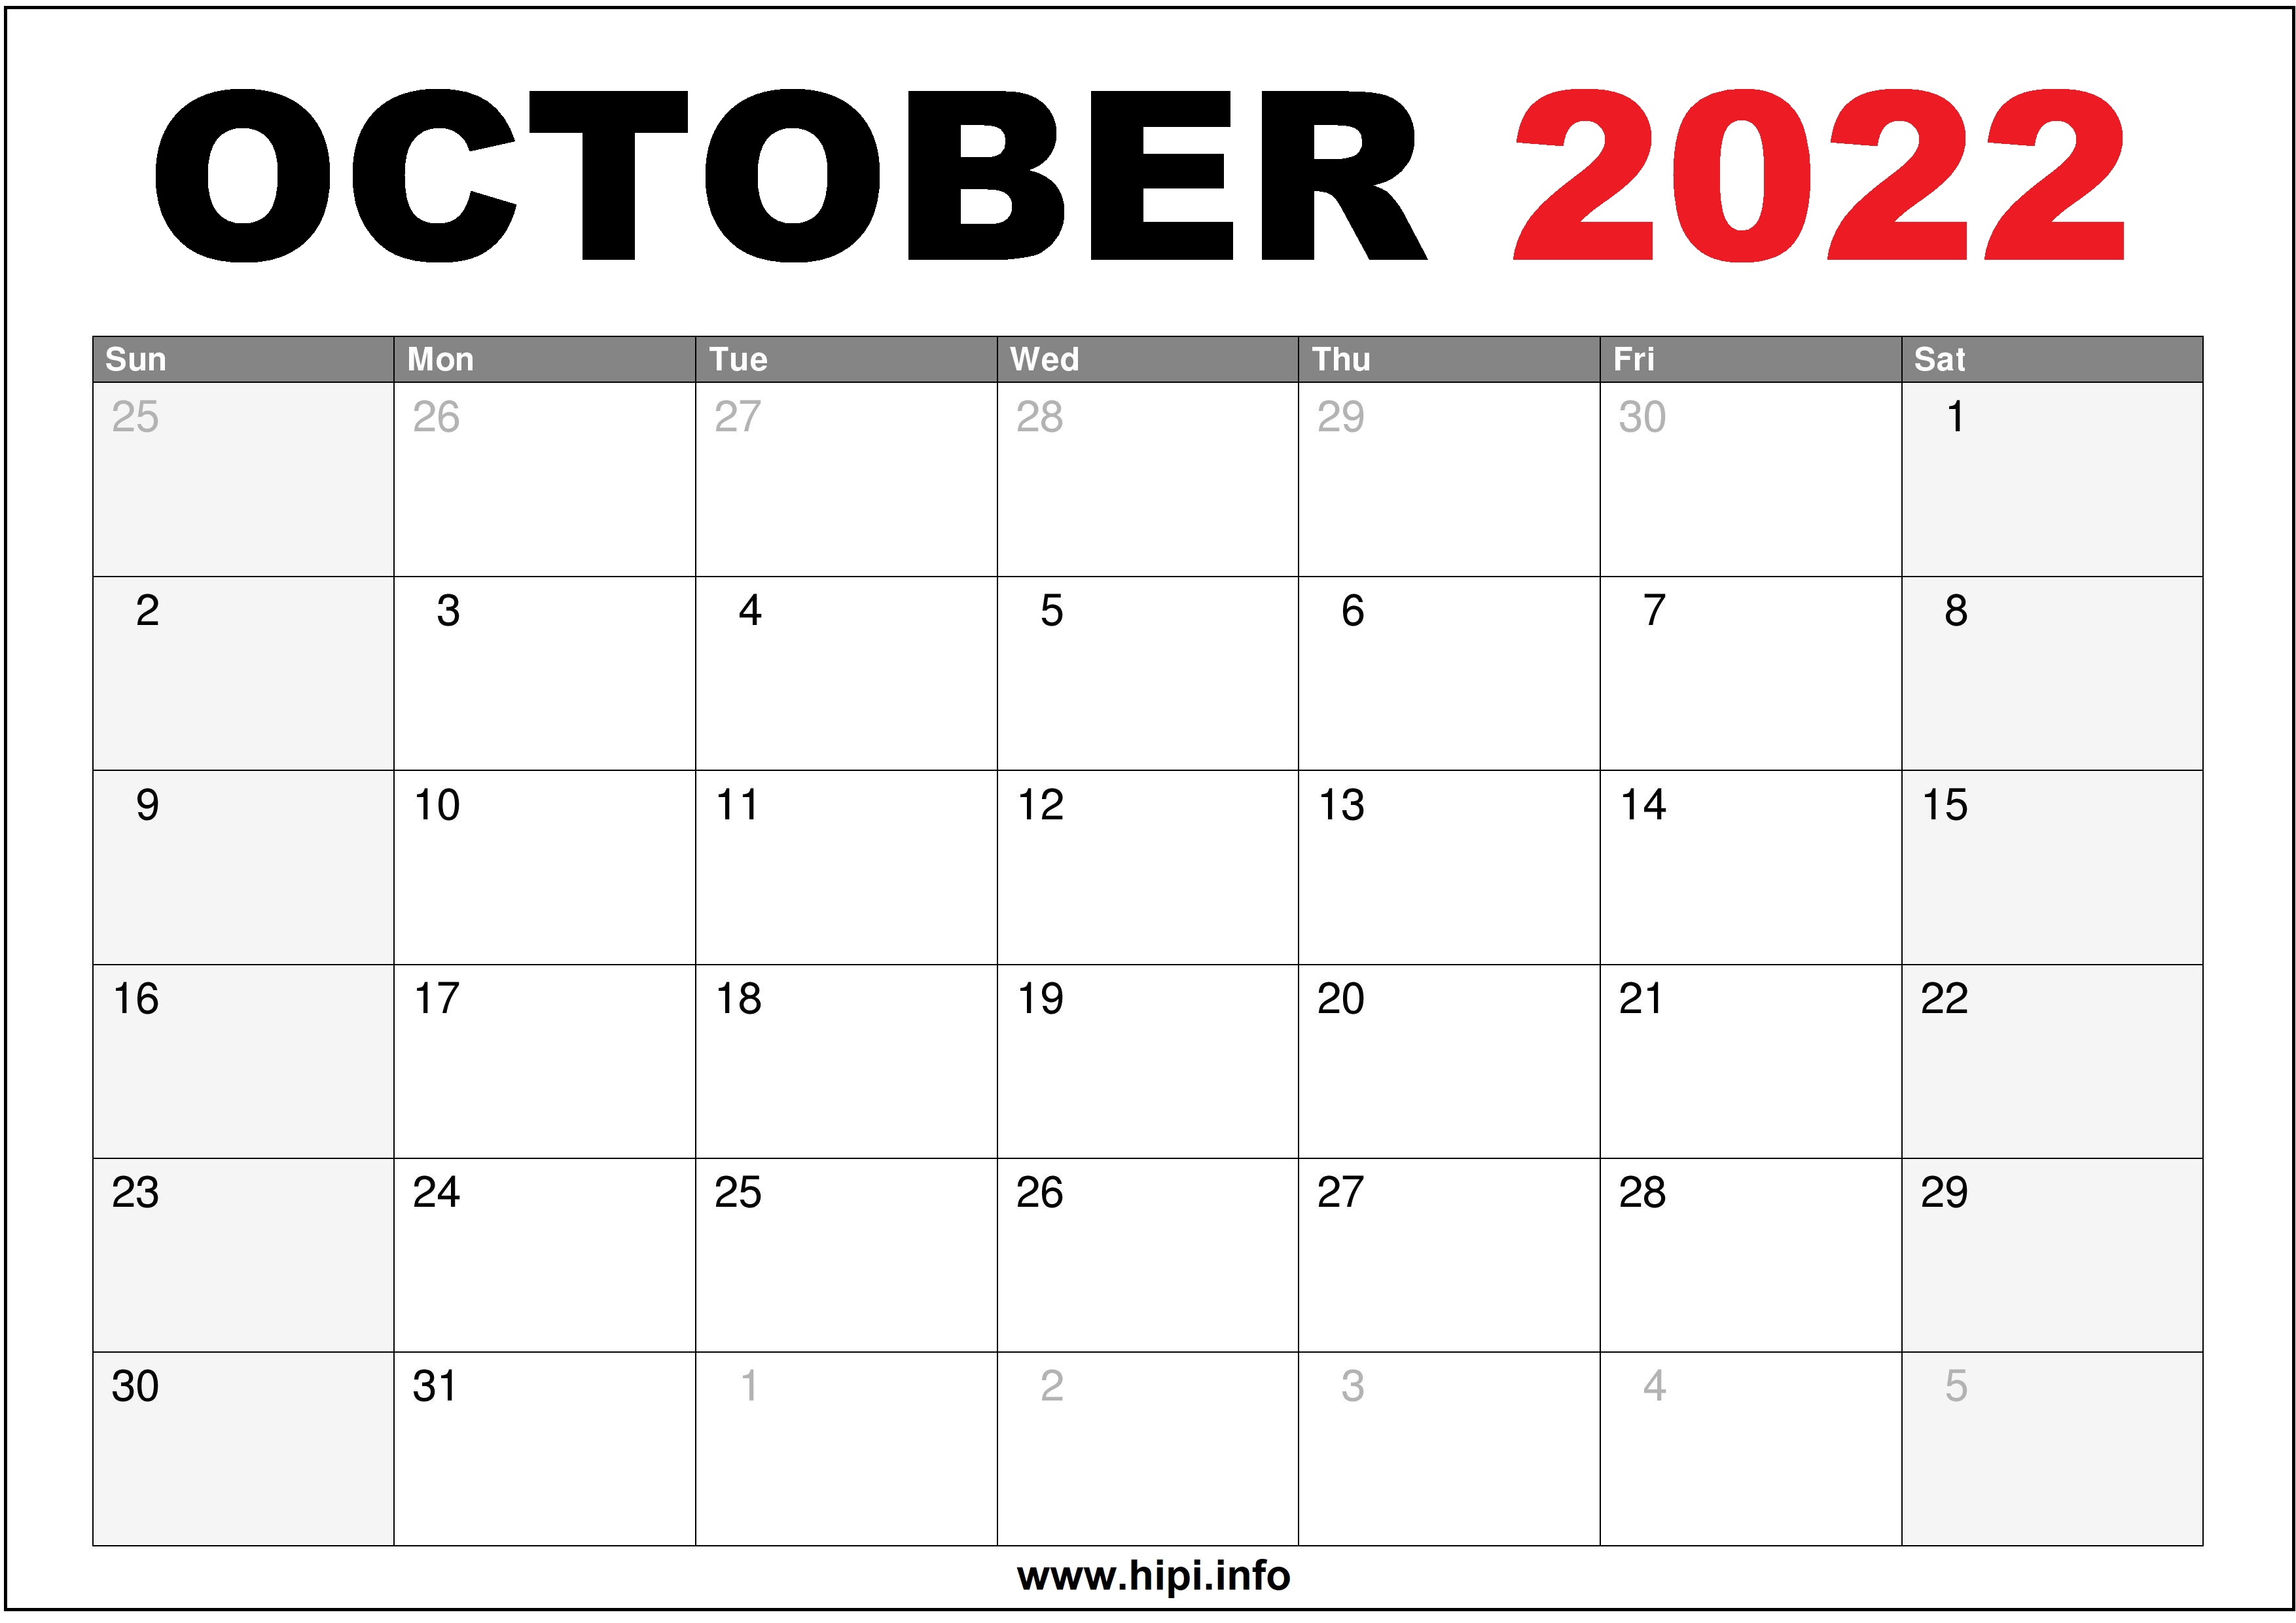 October 2022 Printable Calendar October 2022 Calendar Printable Us - Hipi.info | Calendars Printable Free